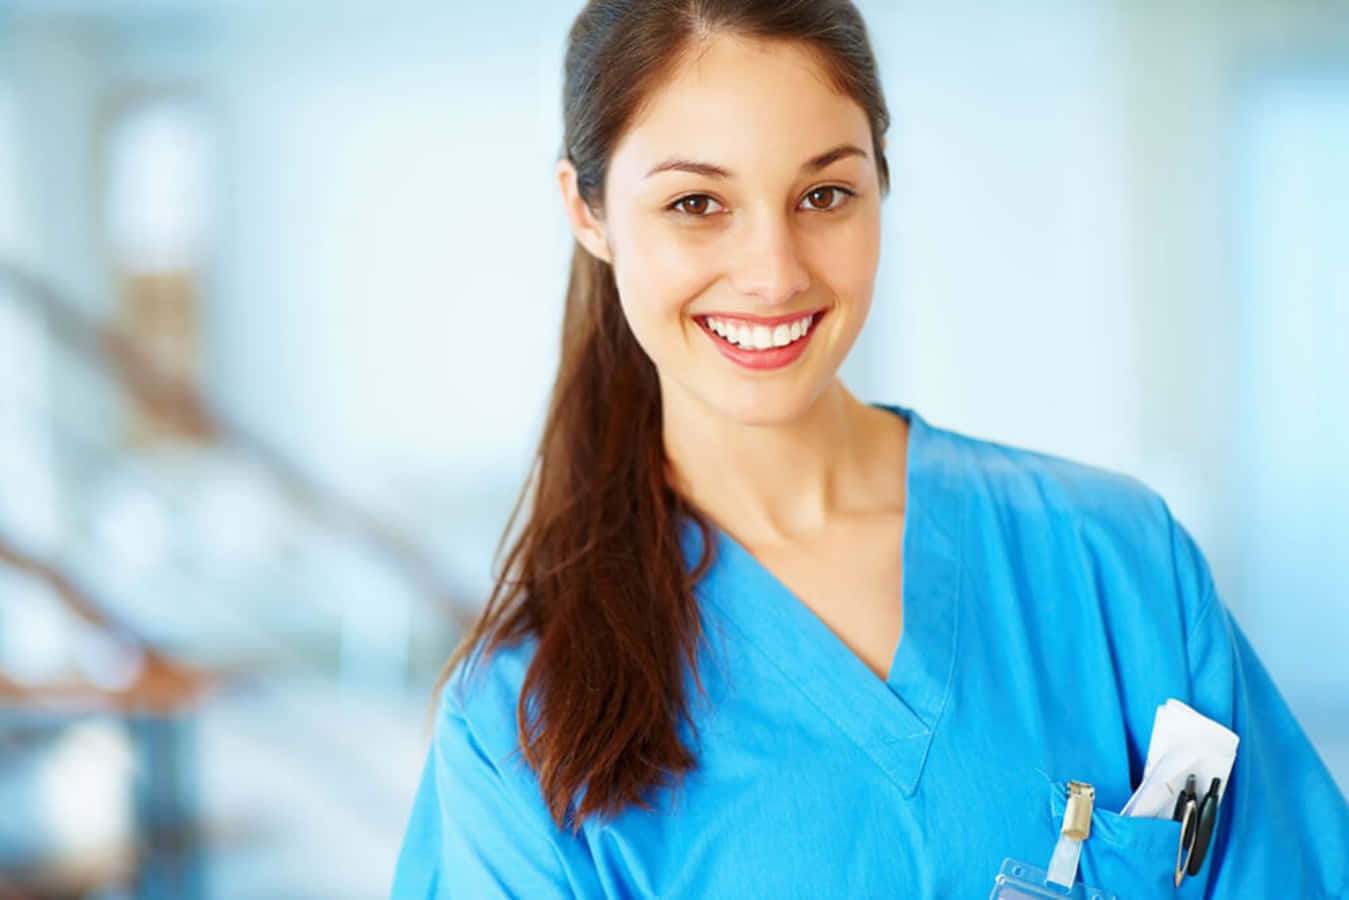 A Smiling Nurse In Blue Scrubs